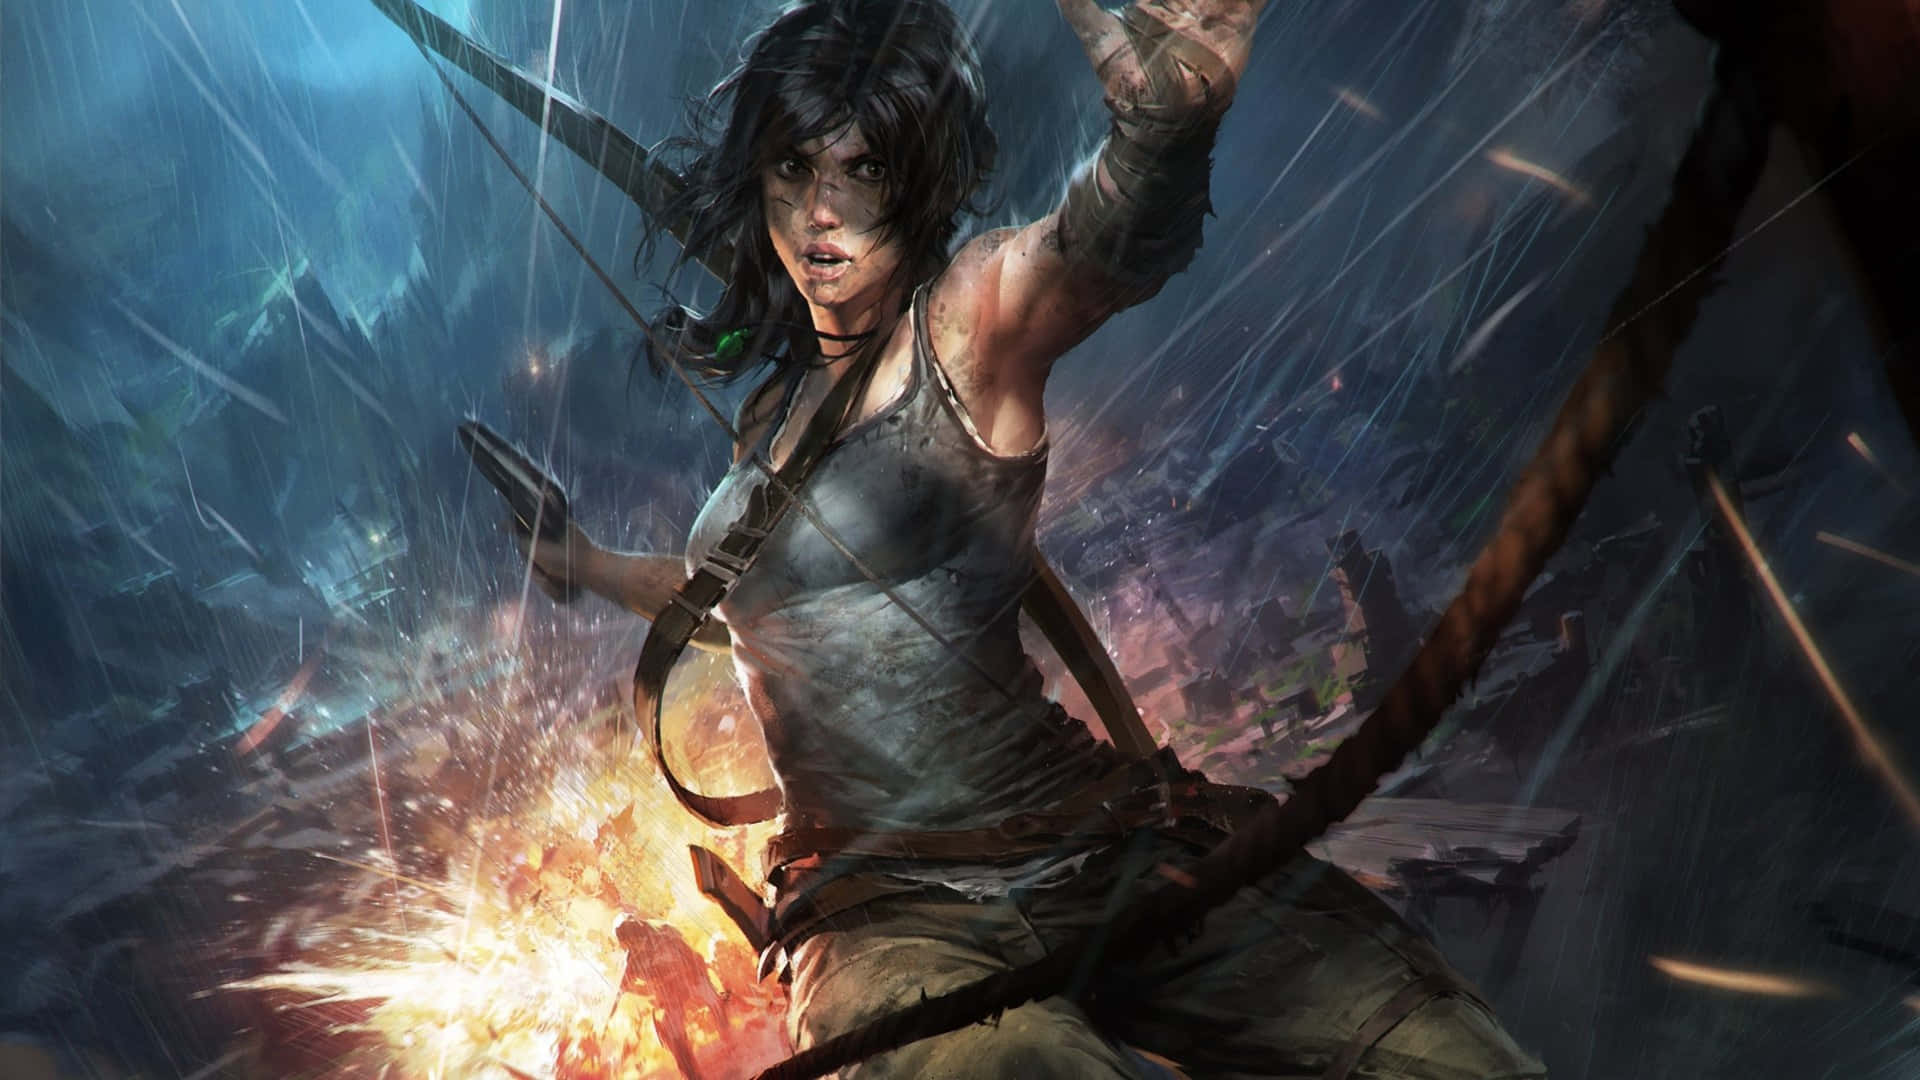 Laracroft Utforskar Miljöerna I Shadow Of The Tomb Raider.